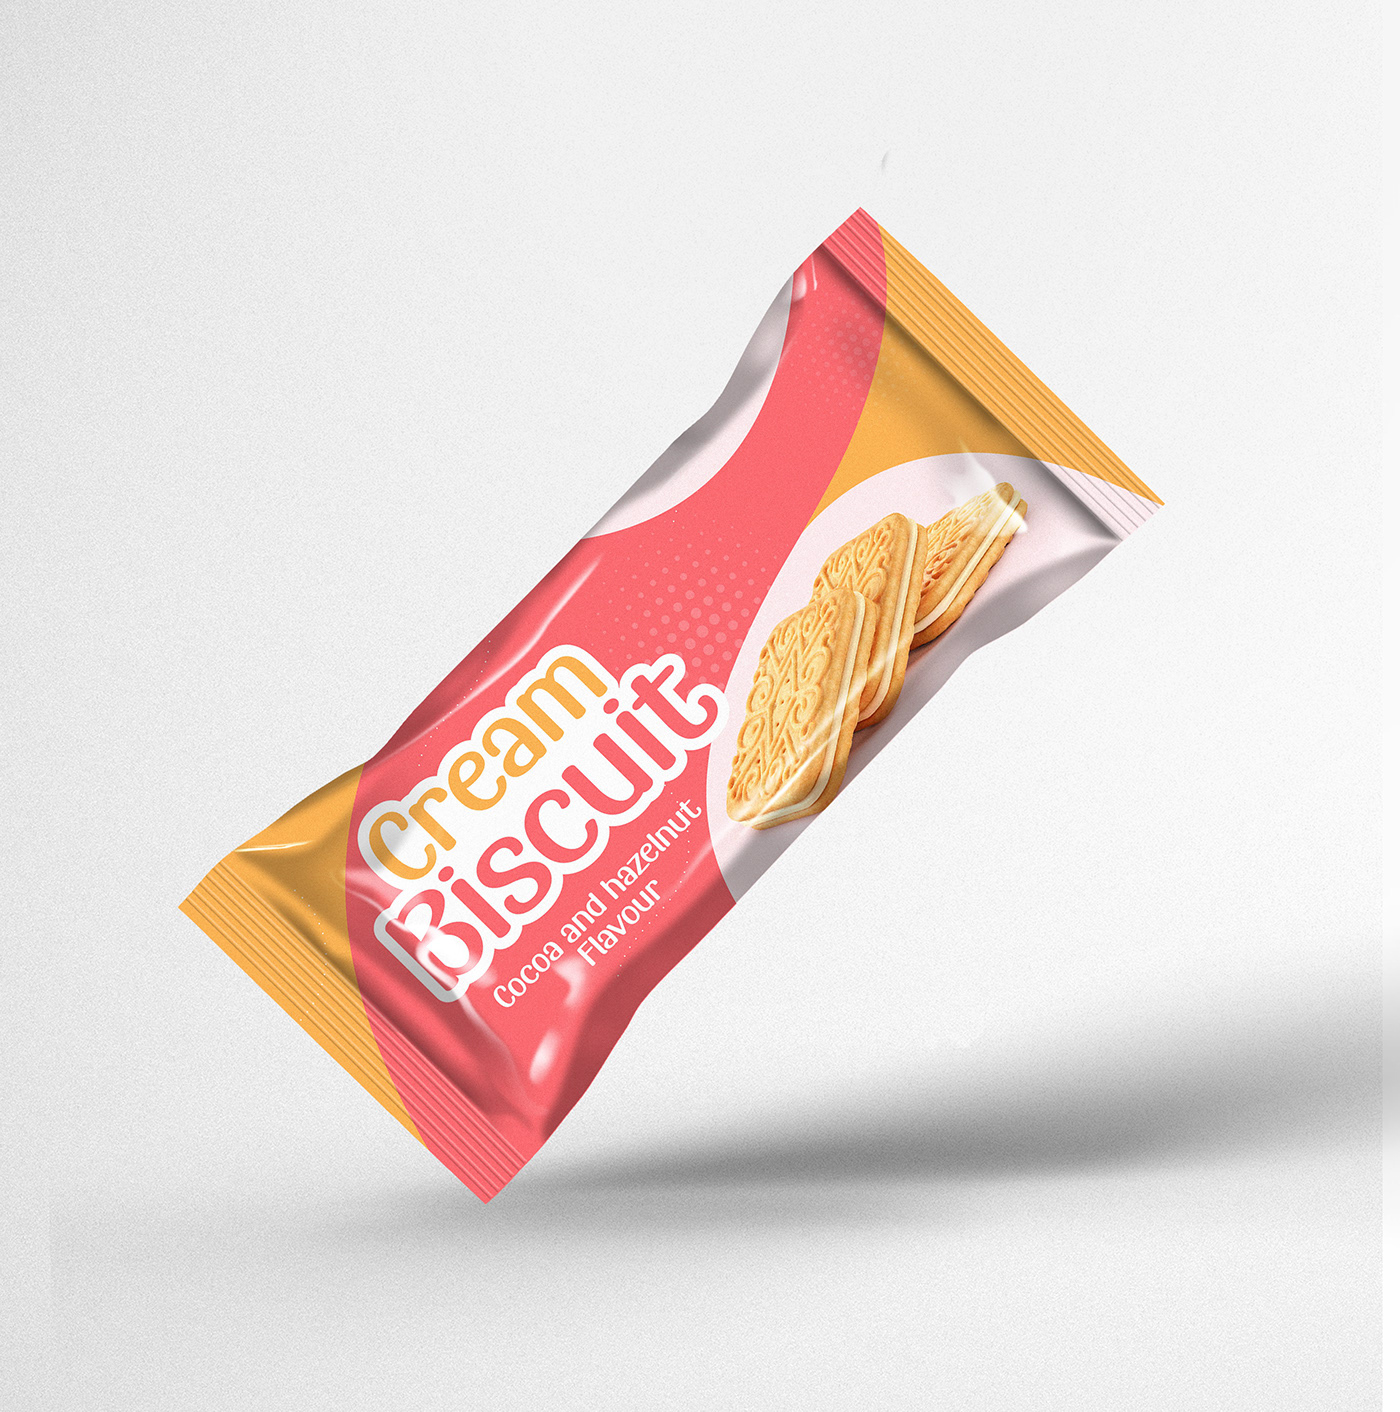 biscuit Packaging packaging design package box design label design product packaging CHOCO BISCUITS Cream biscuit